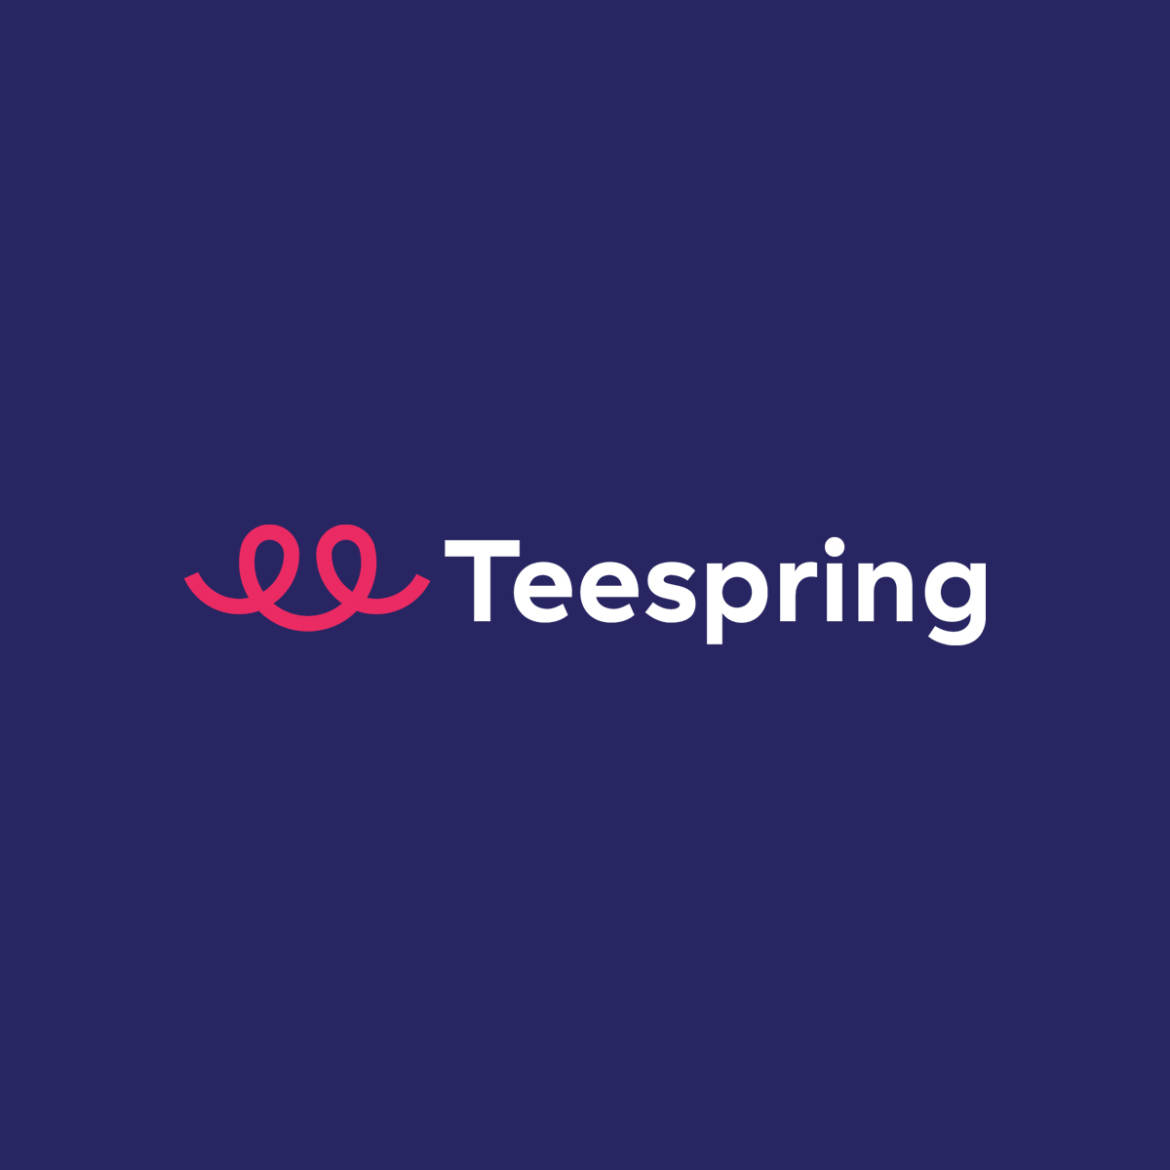 teespring-og-image-rebranded.jpg